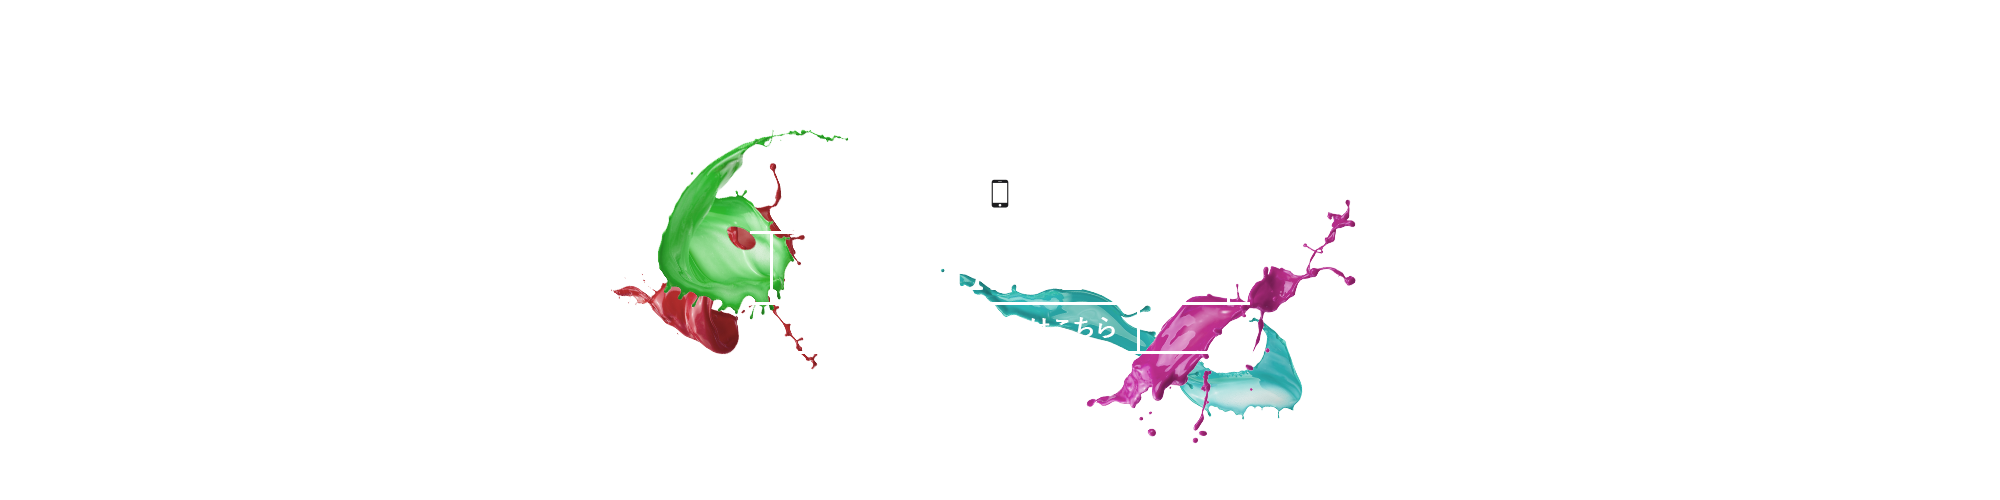 _bnr_contact_f